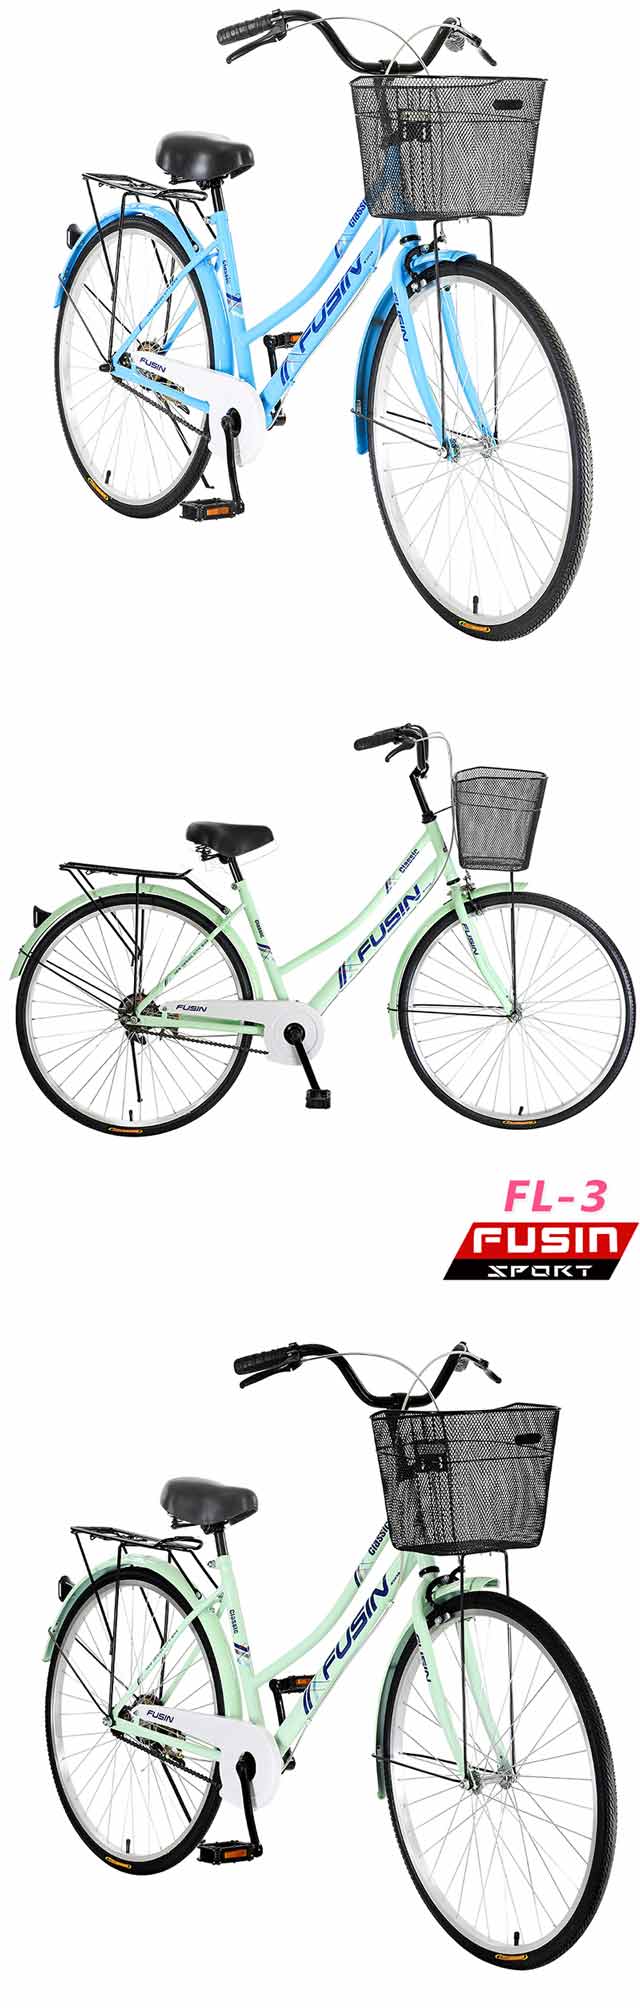 【Fusin】FL-3 經典典雅 淑女車 26吋 單速 搭配 鋁合金輪圈